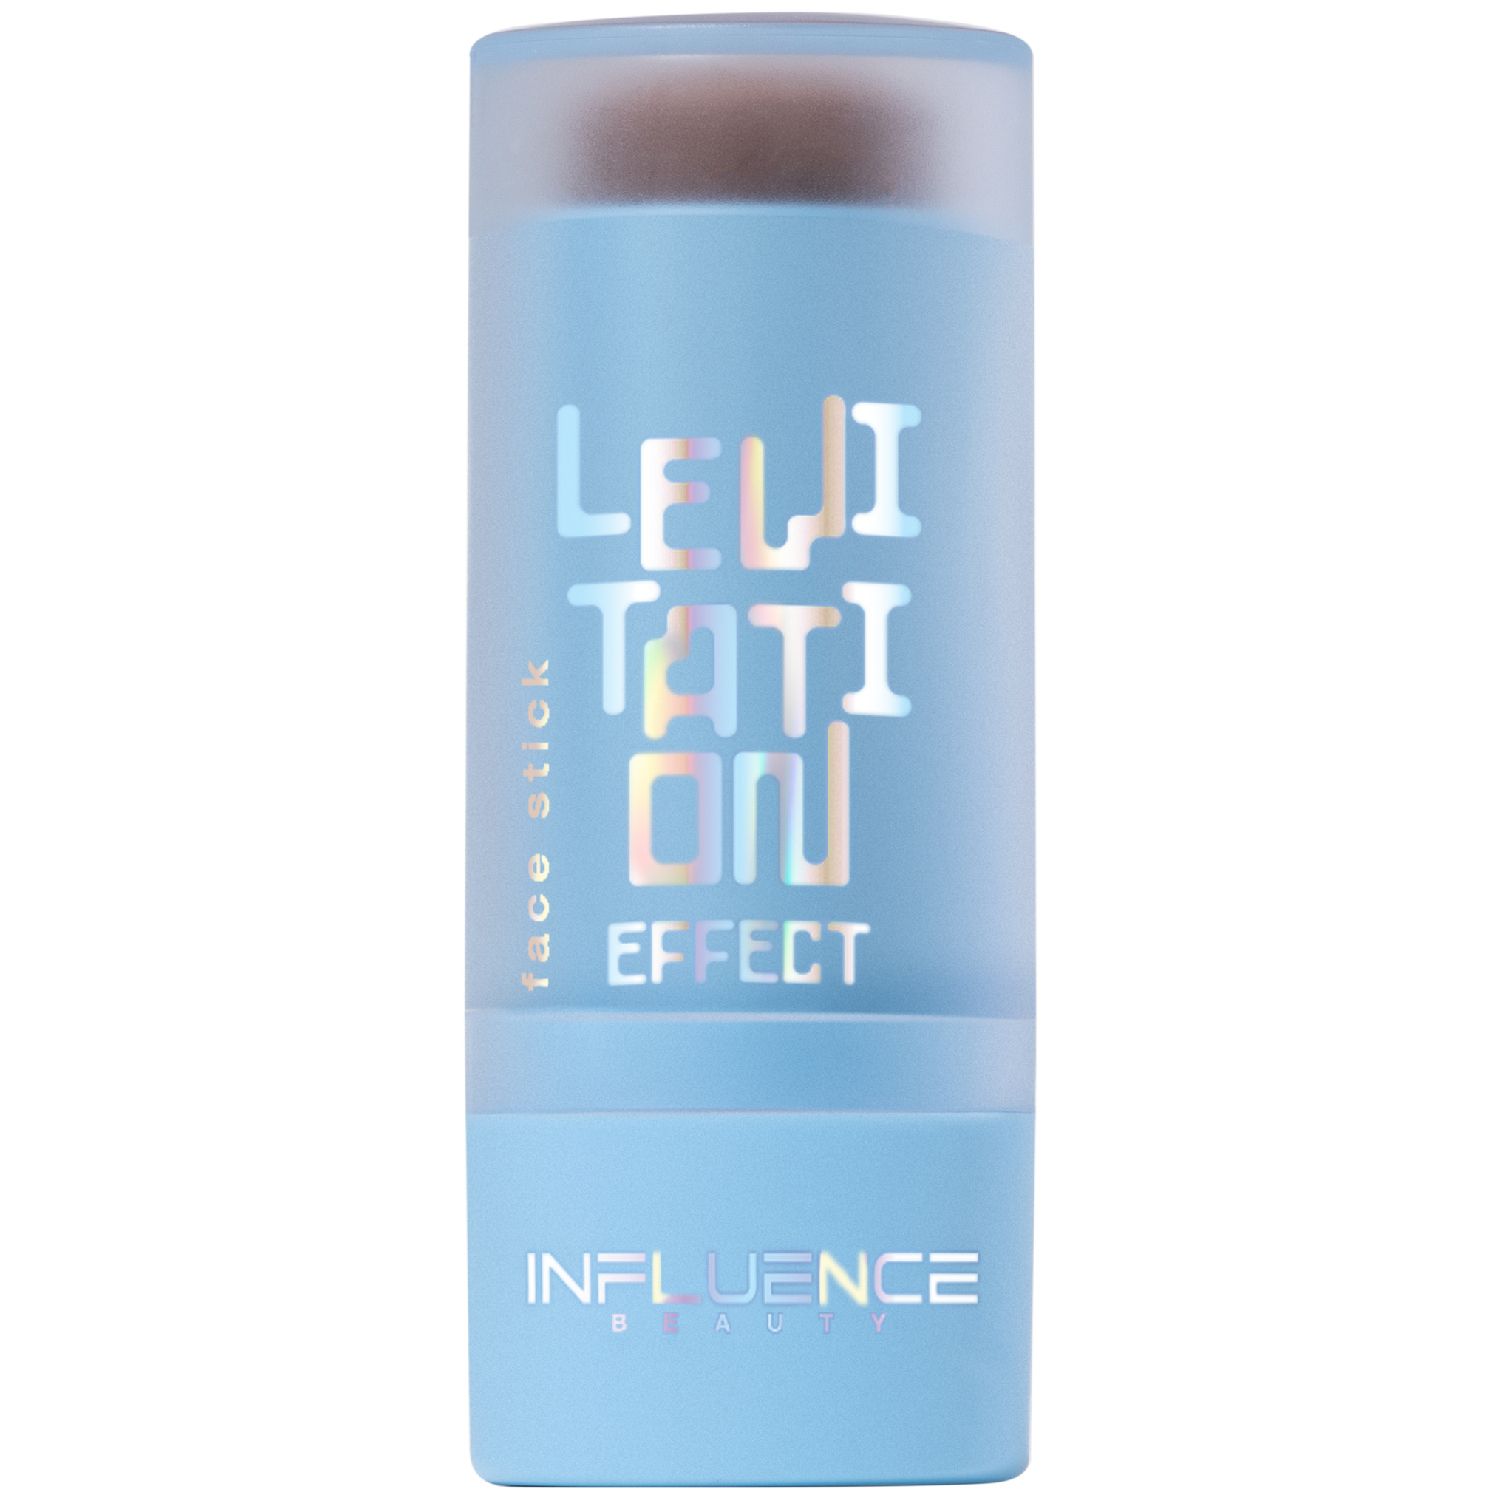 Контуринг-стик Influence Beauty Effect Levitation, 01 бледно-коричневый, 5,5 г